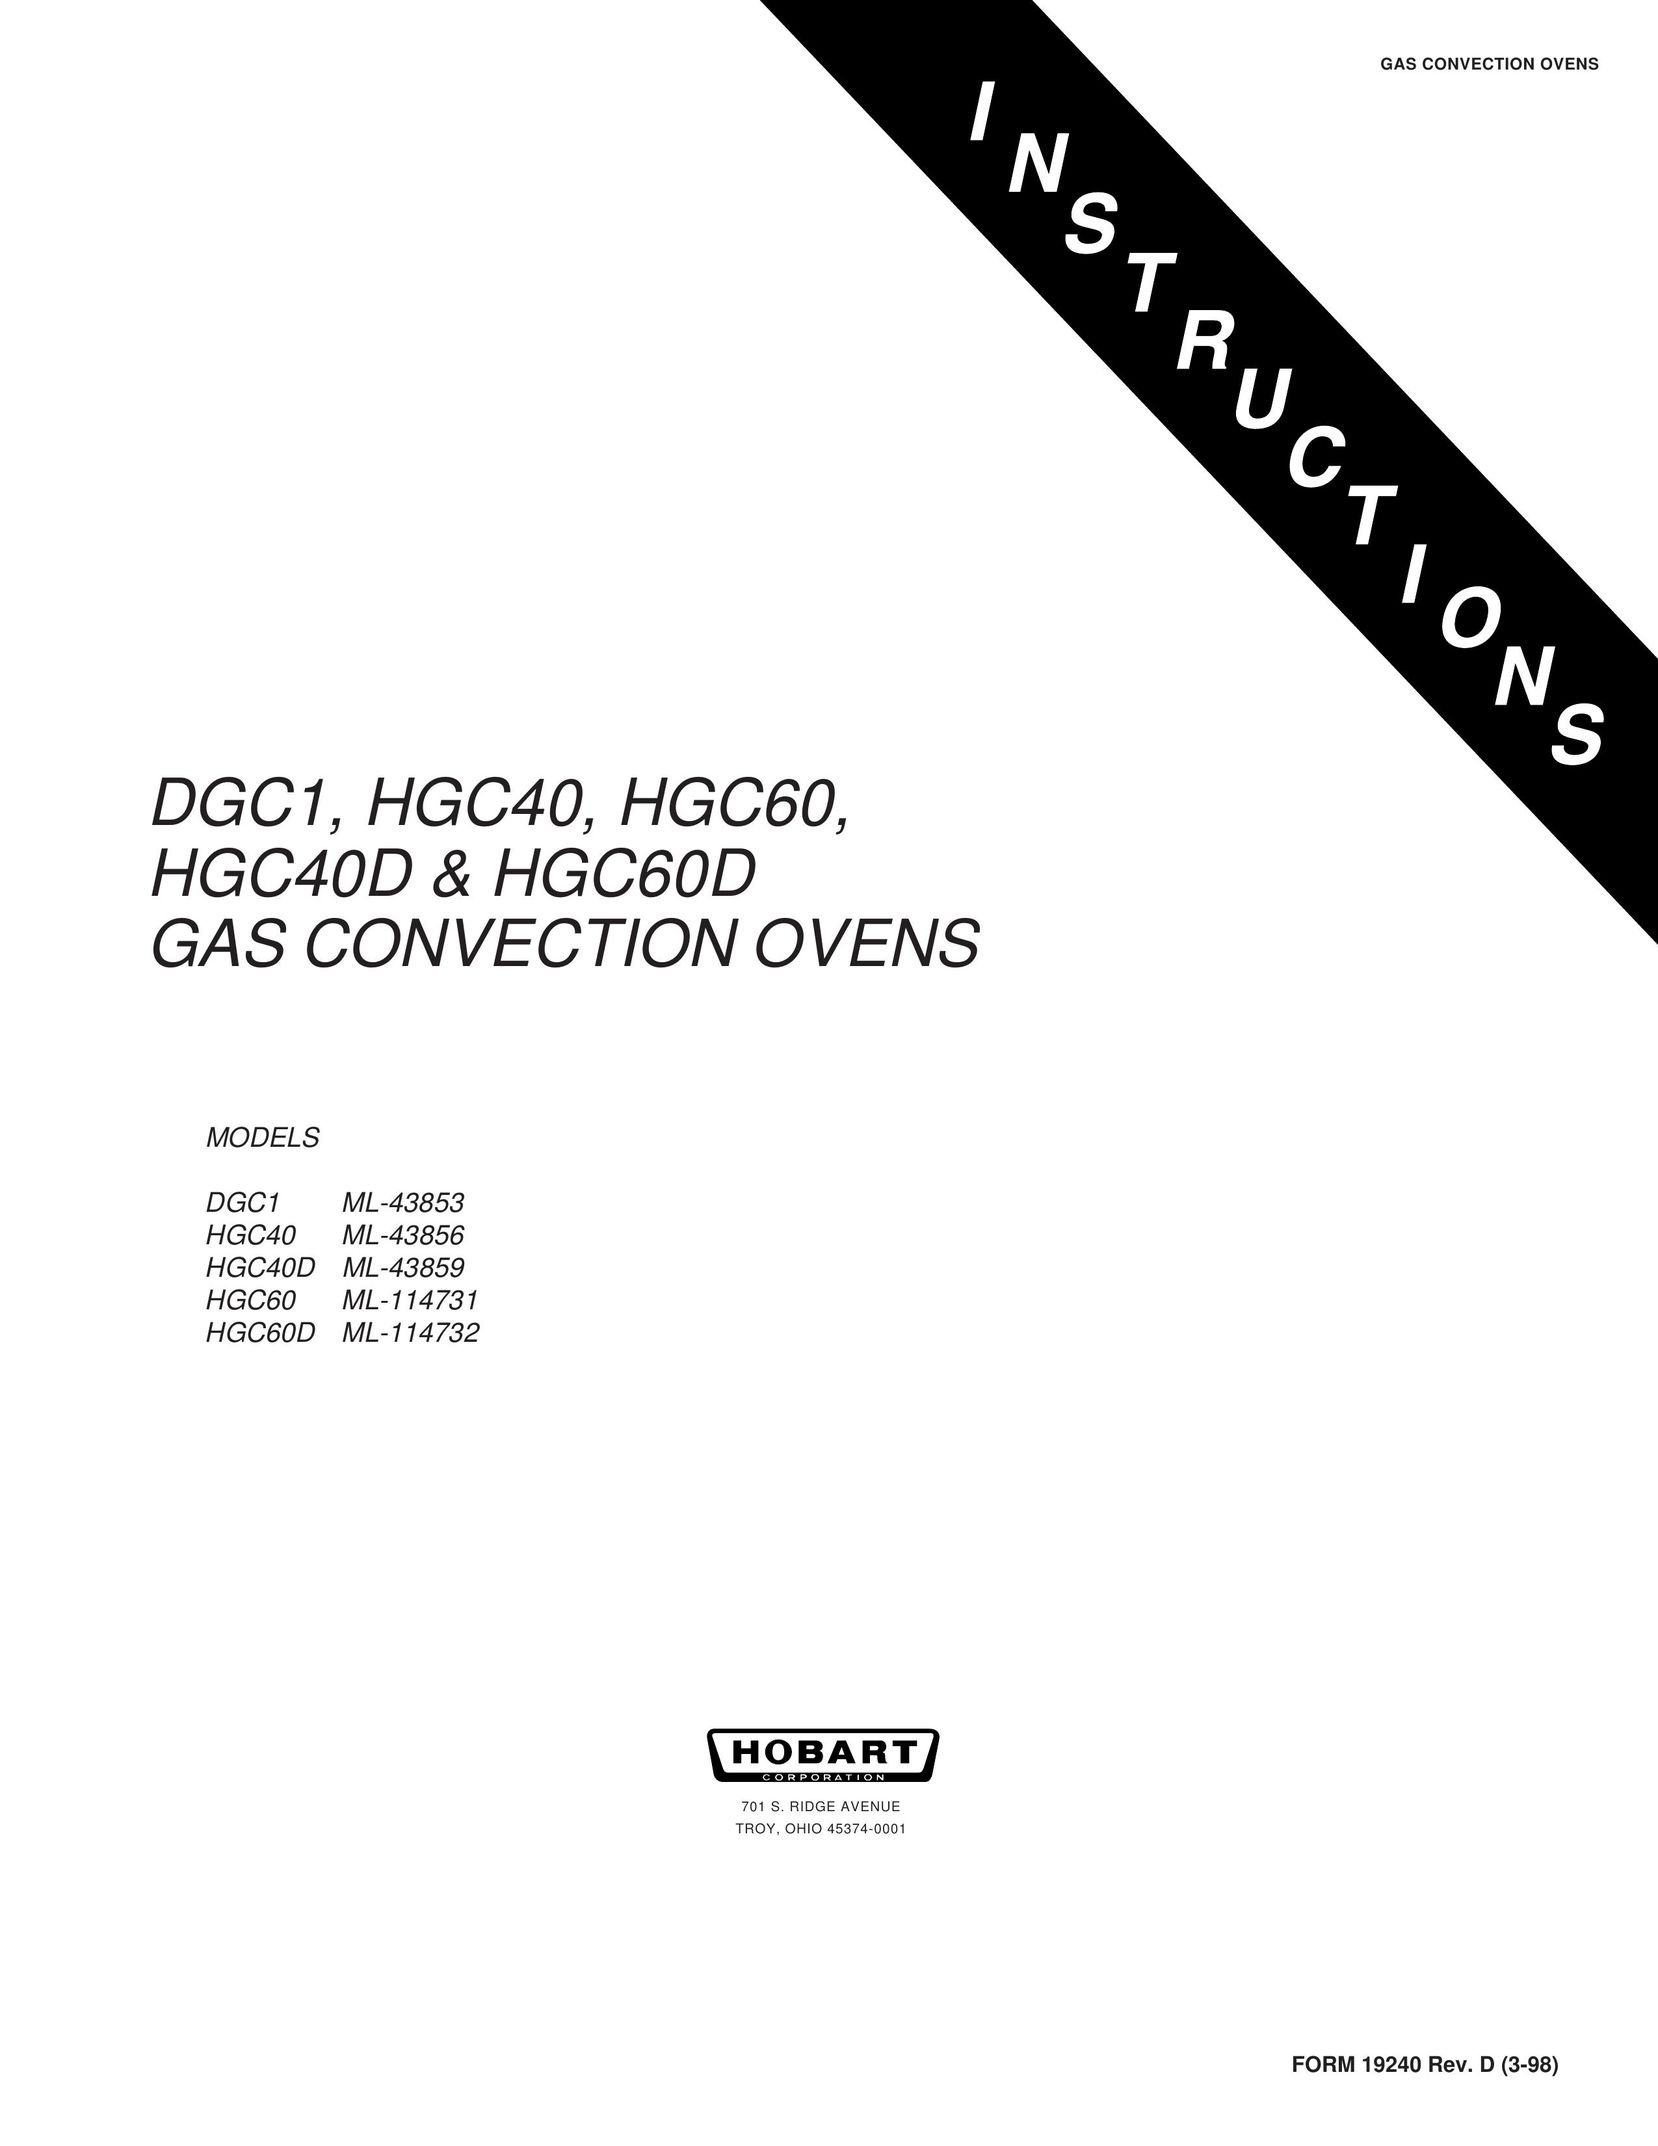 Hobart HGC40D & HGC60D Convection Oven User Manual